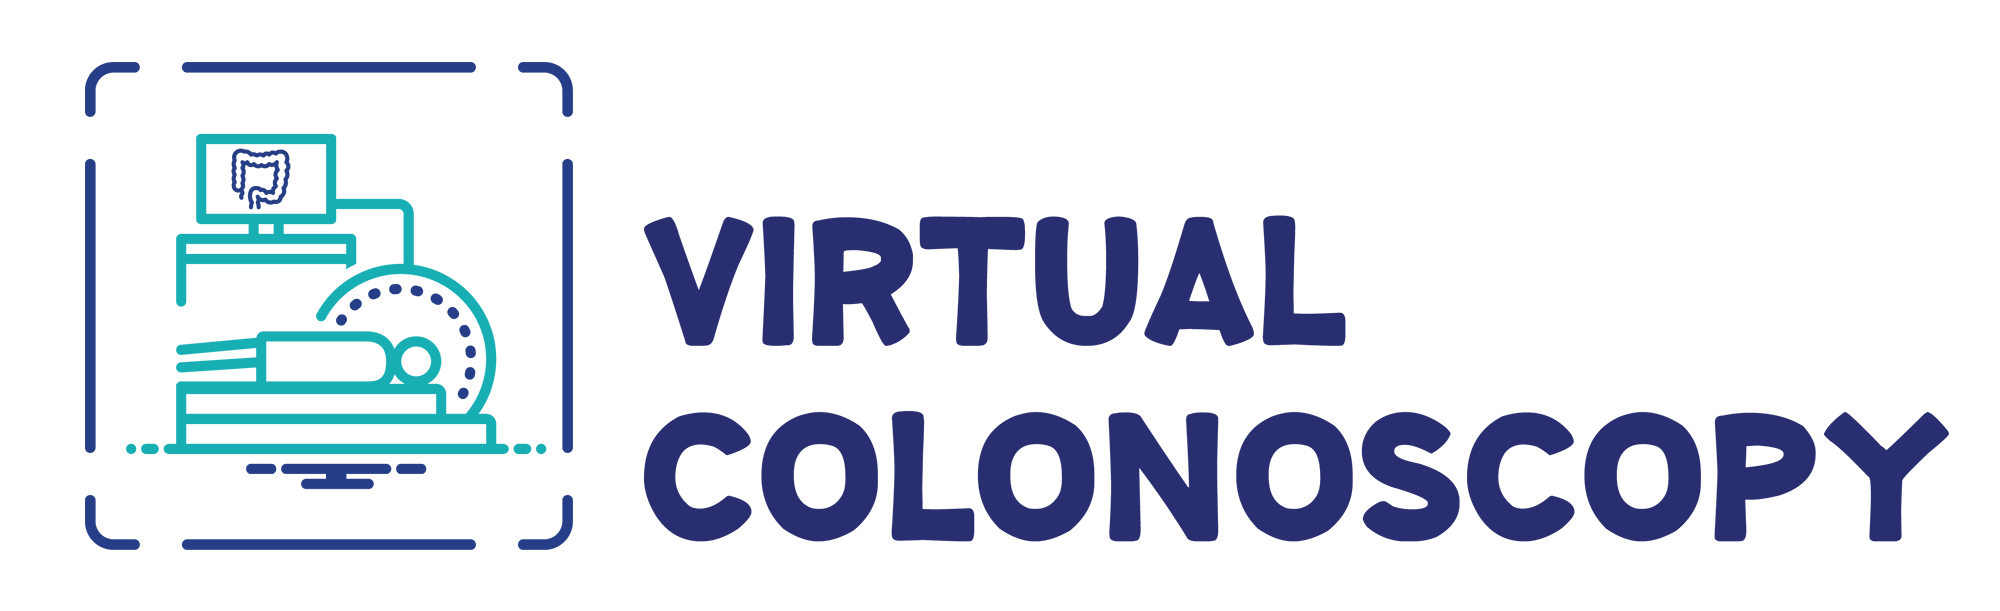 Virtual Colonoscopy, New Jersey Imaging Network